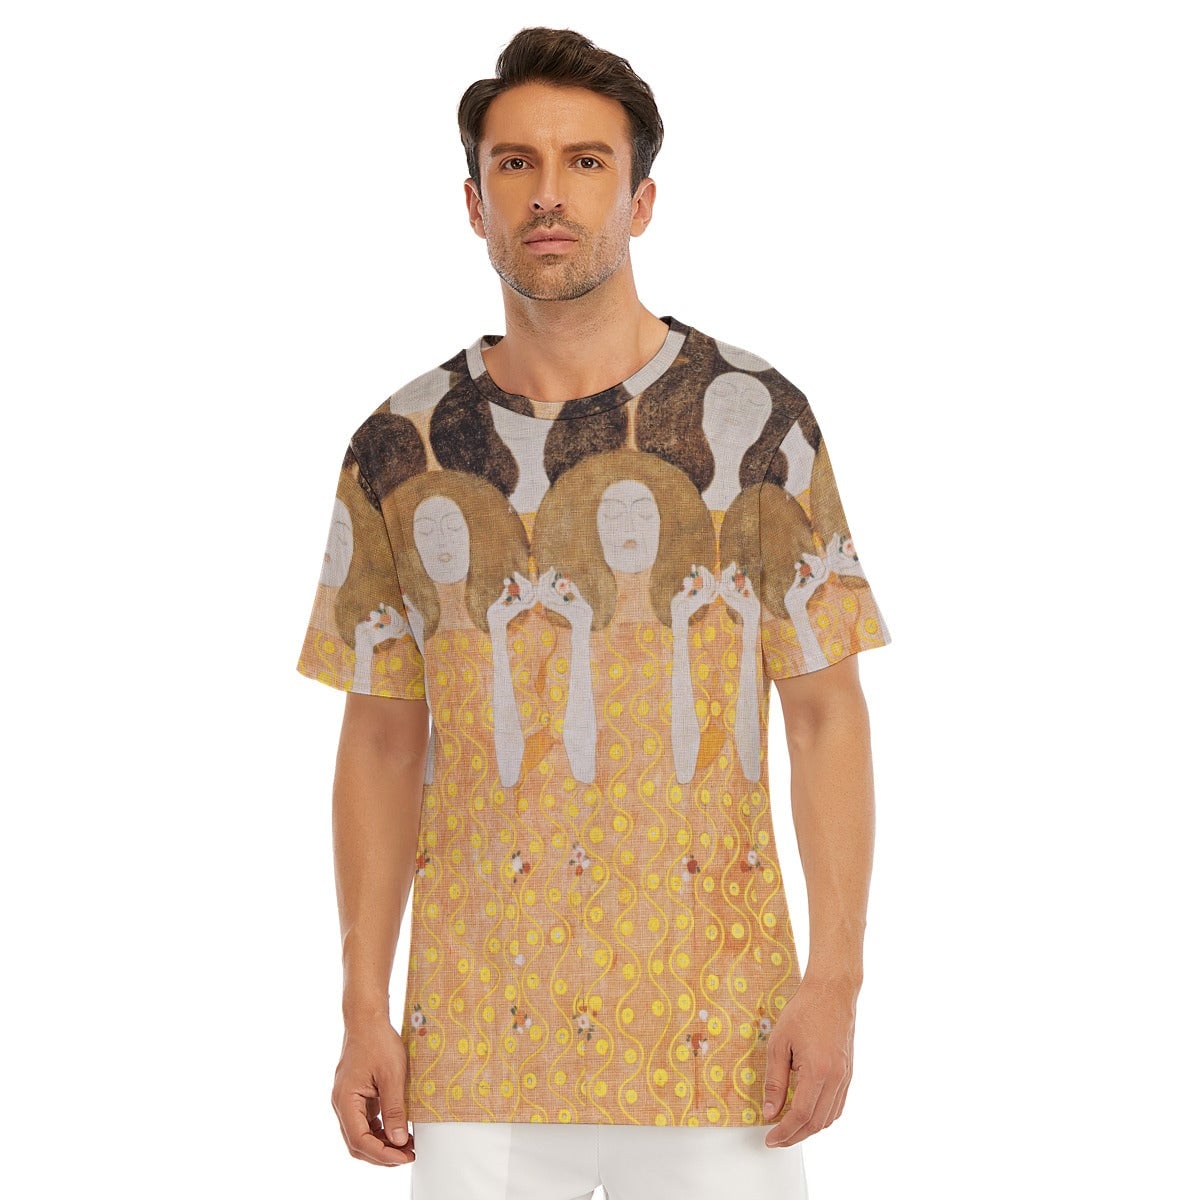 Gustav Klimt’s Beethoven Frieze T-Shirt